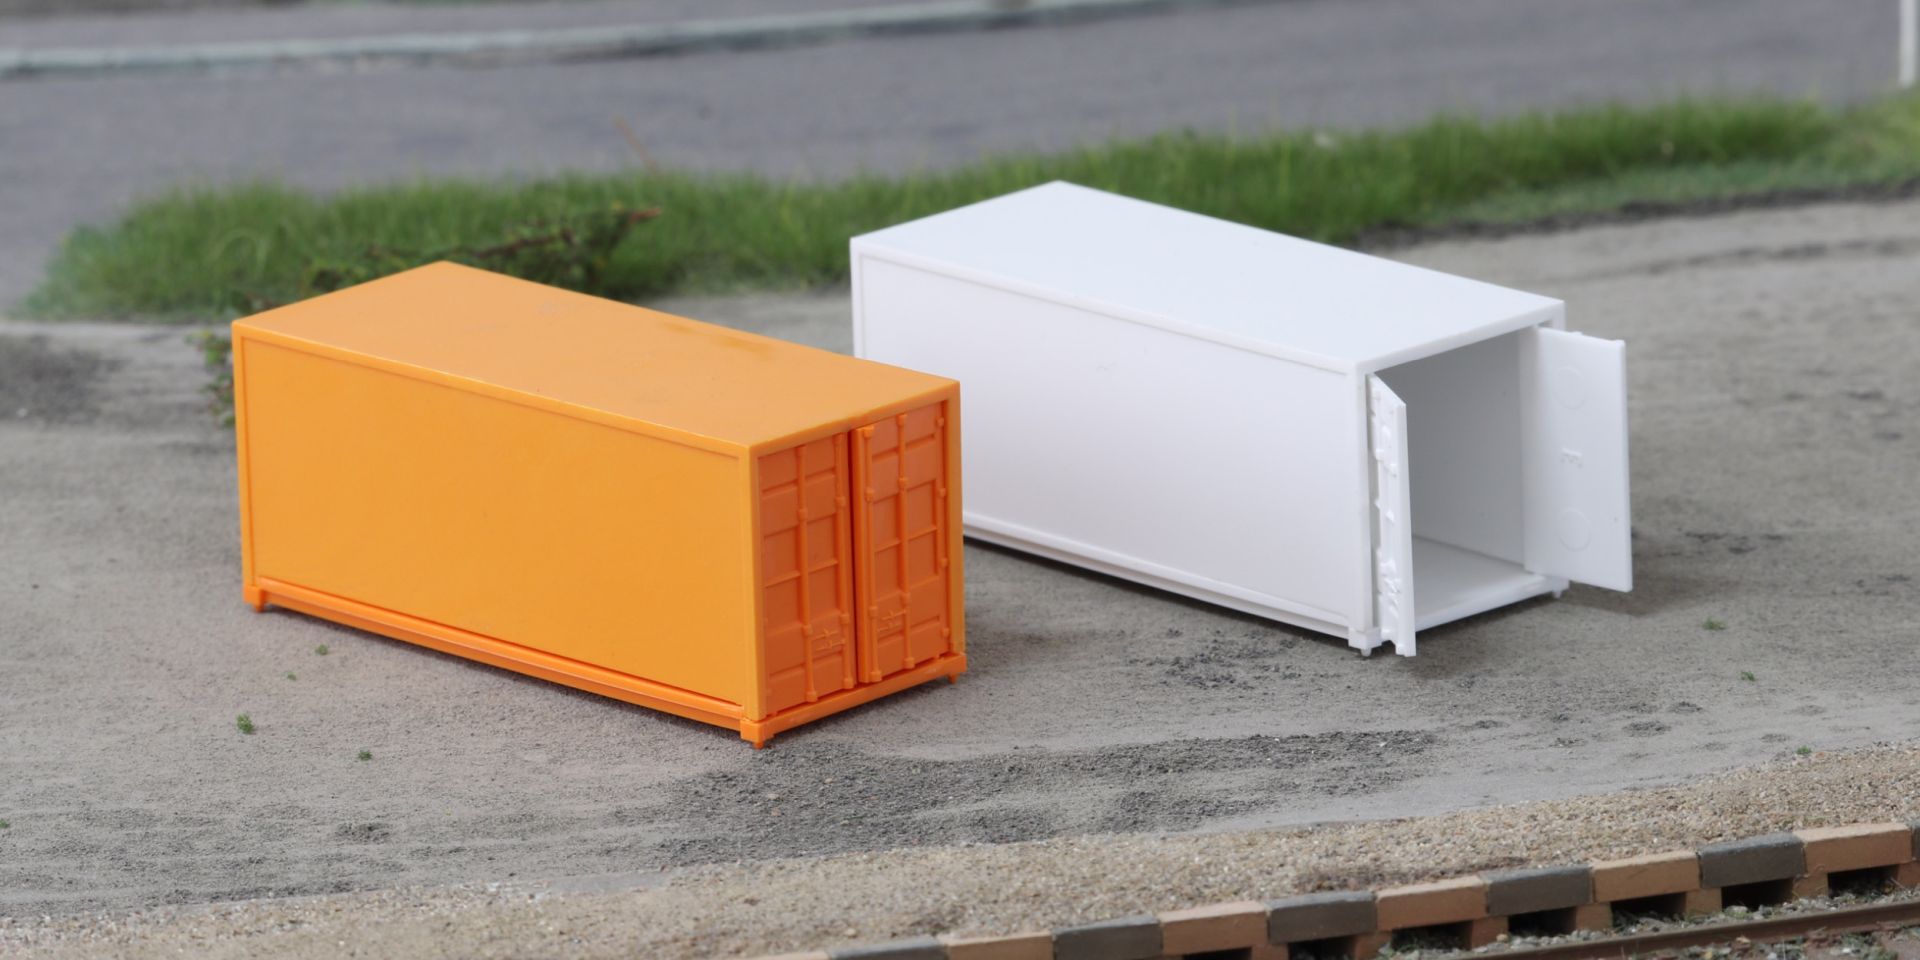 igra 66818213 - 2er Set Container glatt, weiß-orange